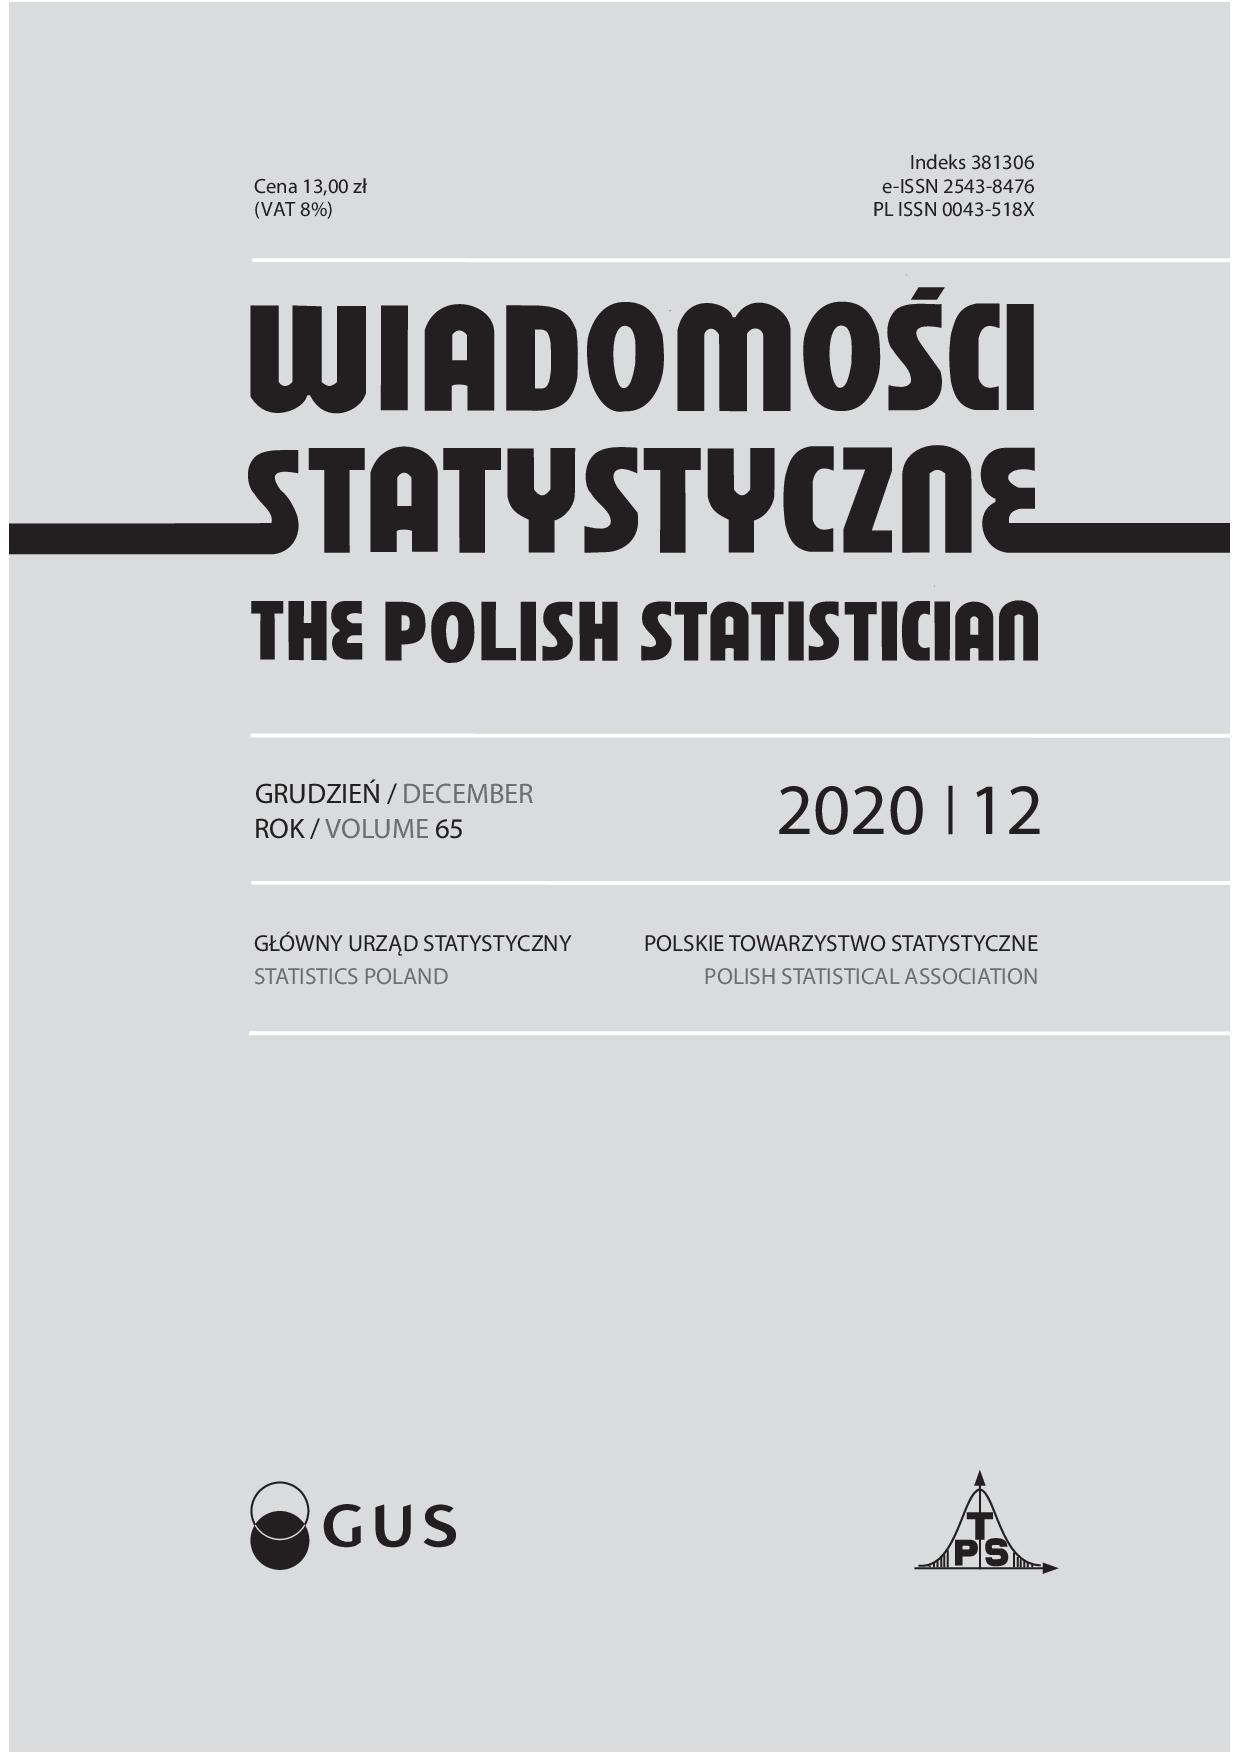 Review of Elżbieta Gołata’s book "The end of the traditional censuses era" Cover Image